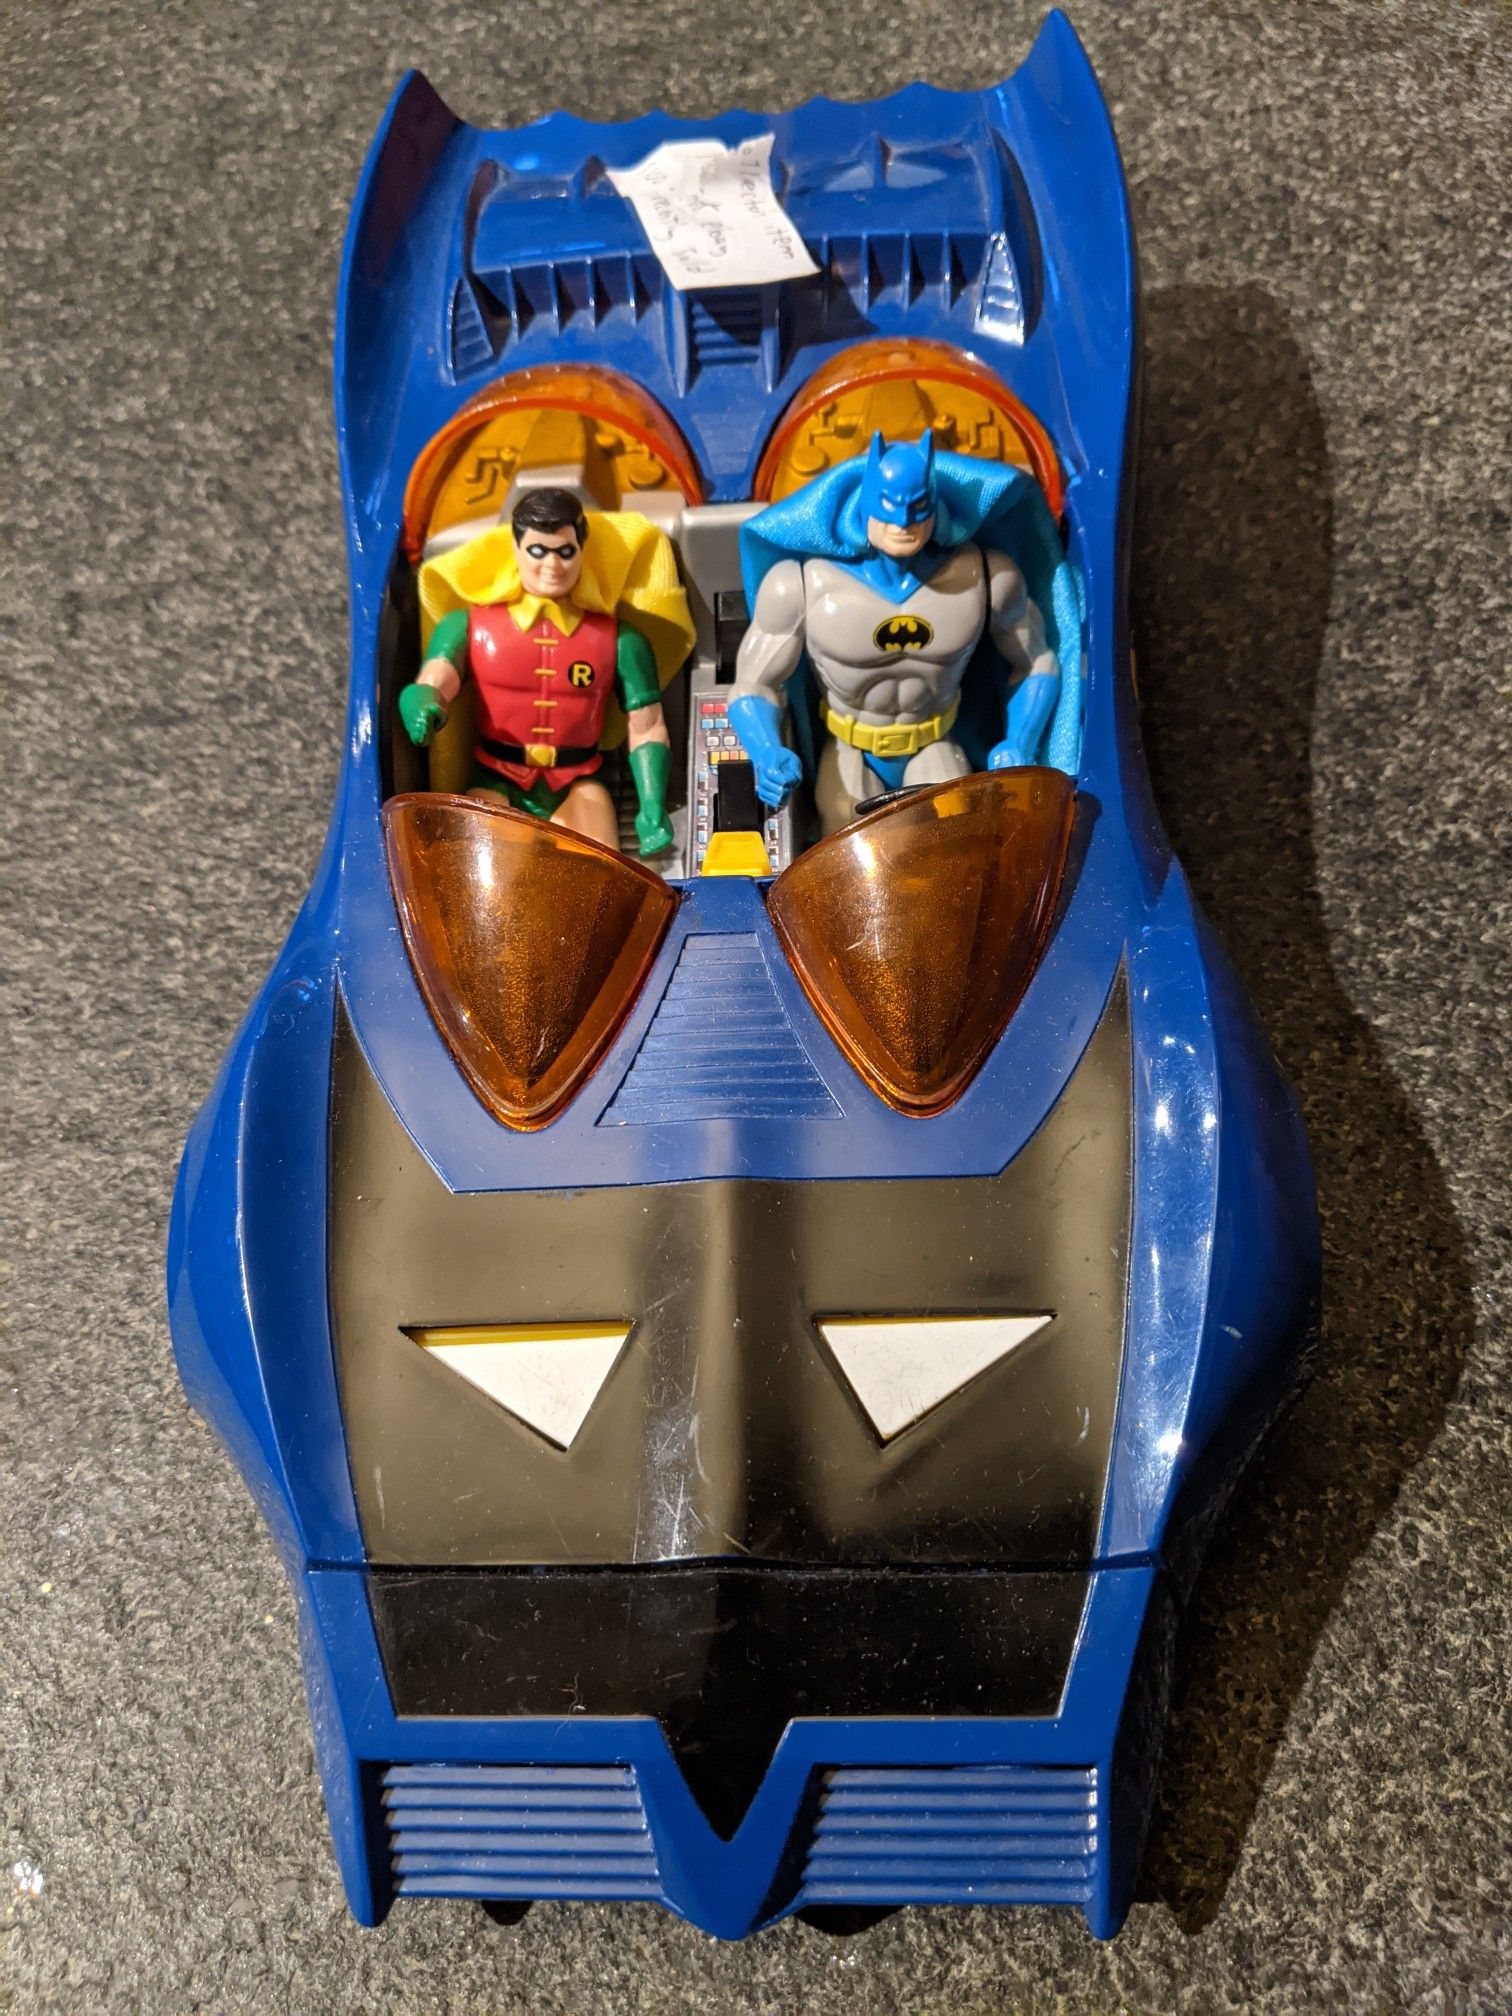 PRICE DROP. Rare vintage 1984 Kenner Super Powers Batmobile W/ Batman and Robin action figures